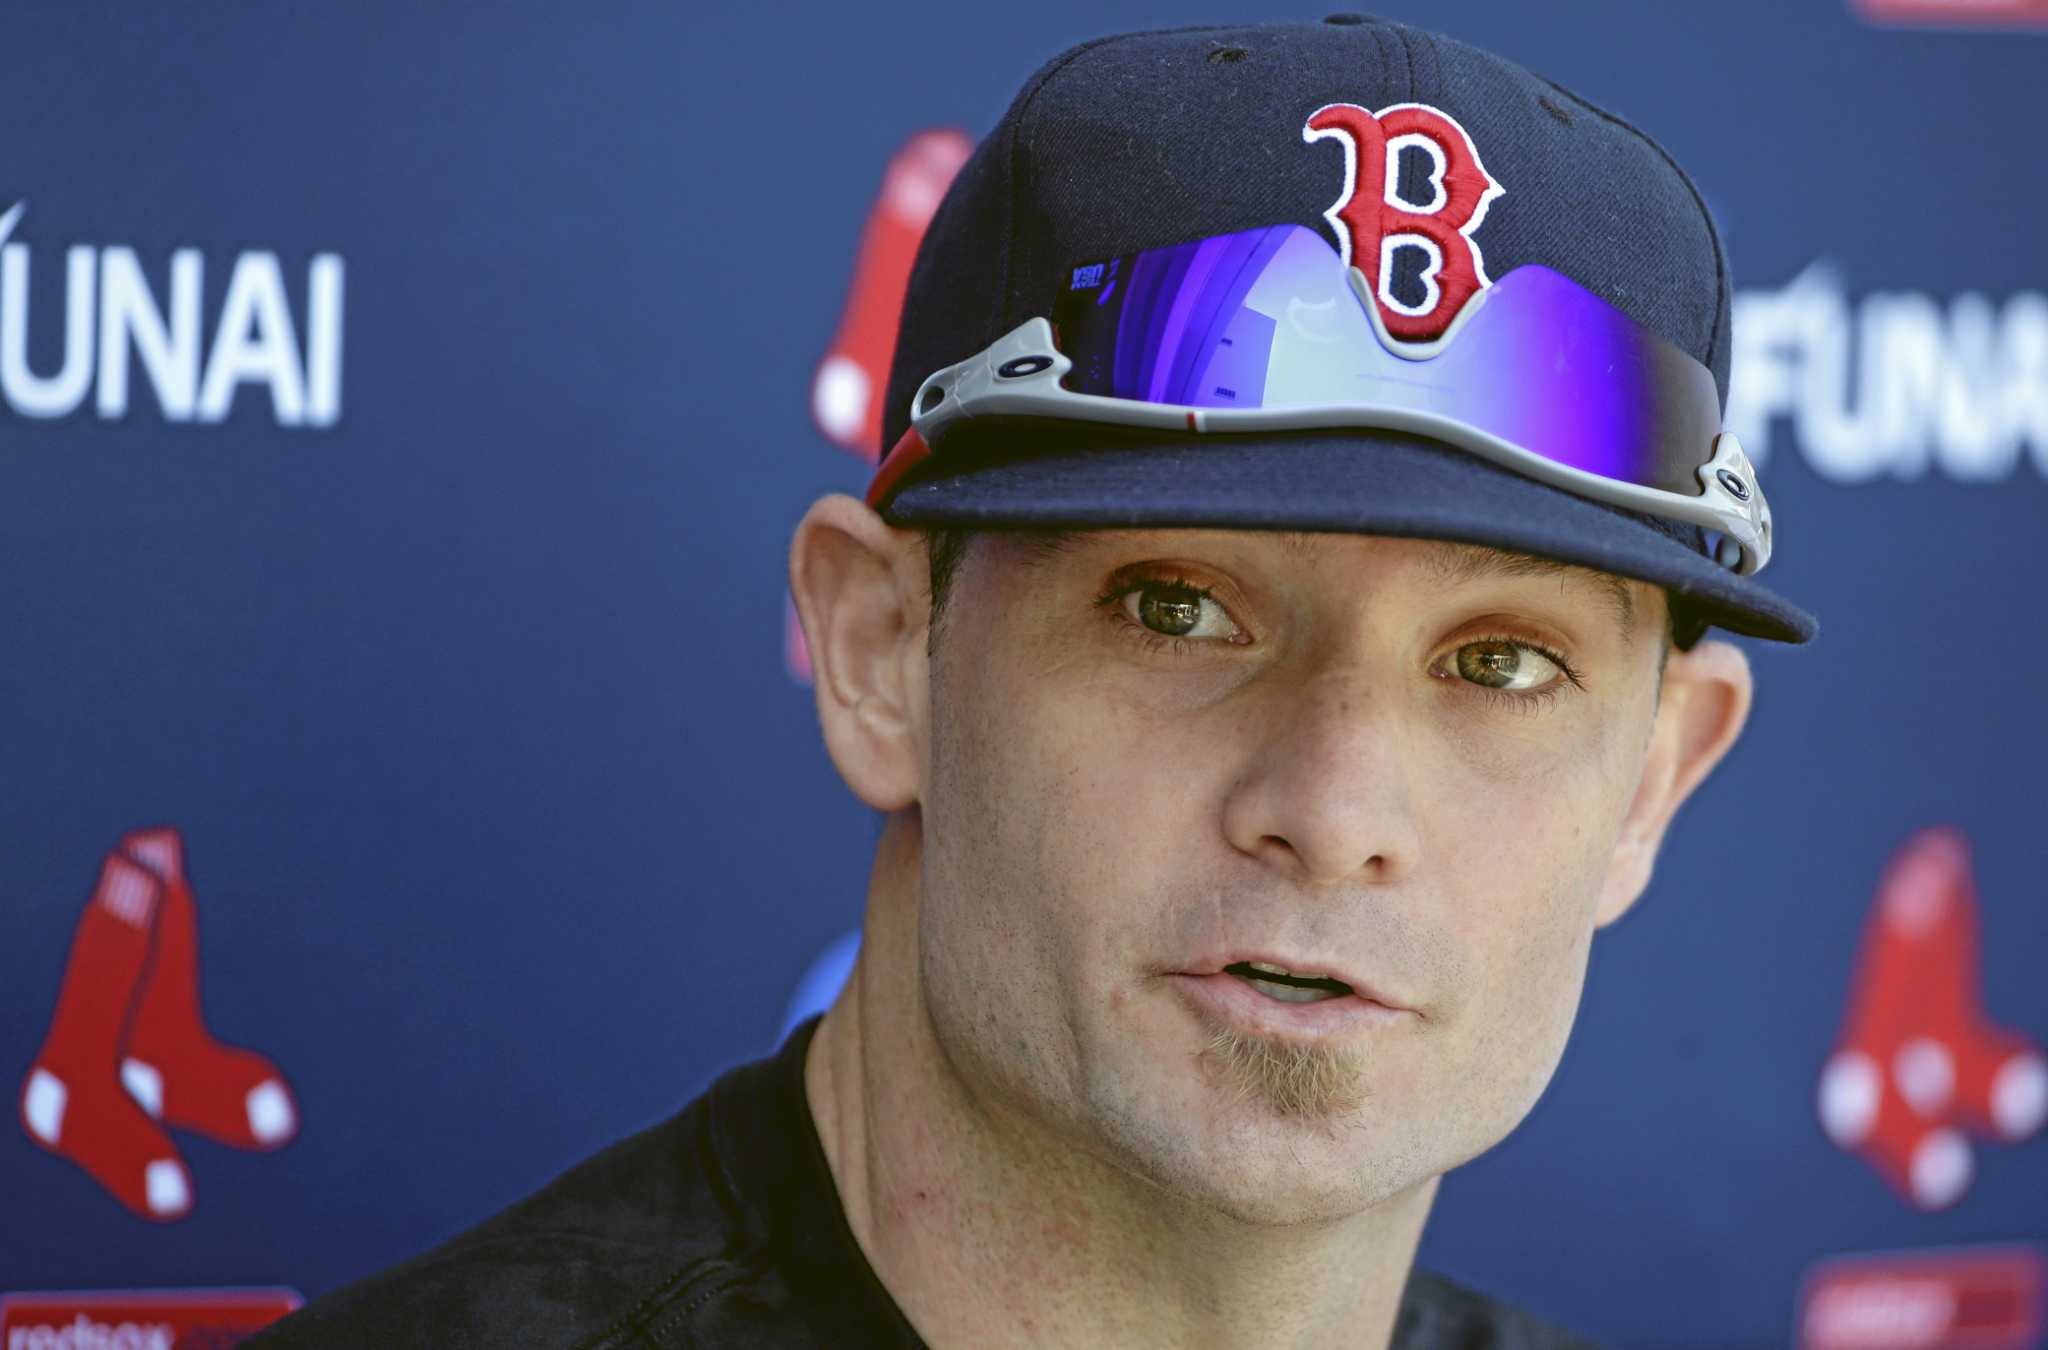 Boston Red Sox beard update: Jonny Gomes, David Ross say beards